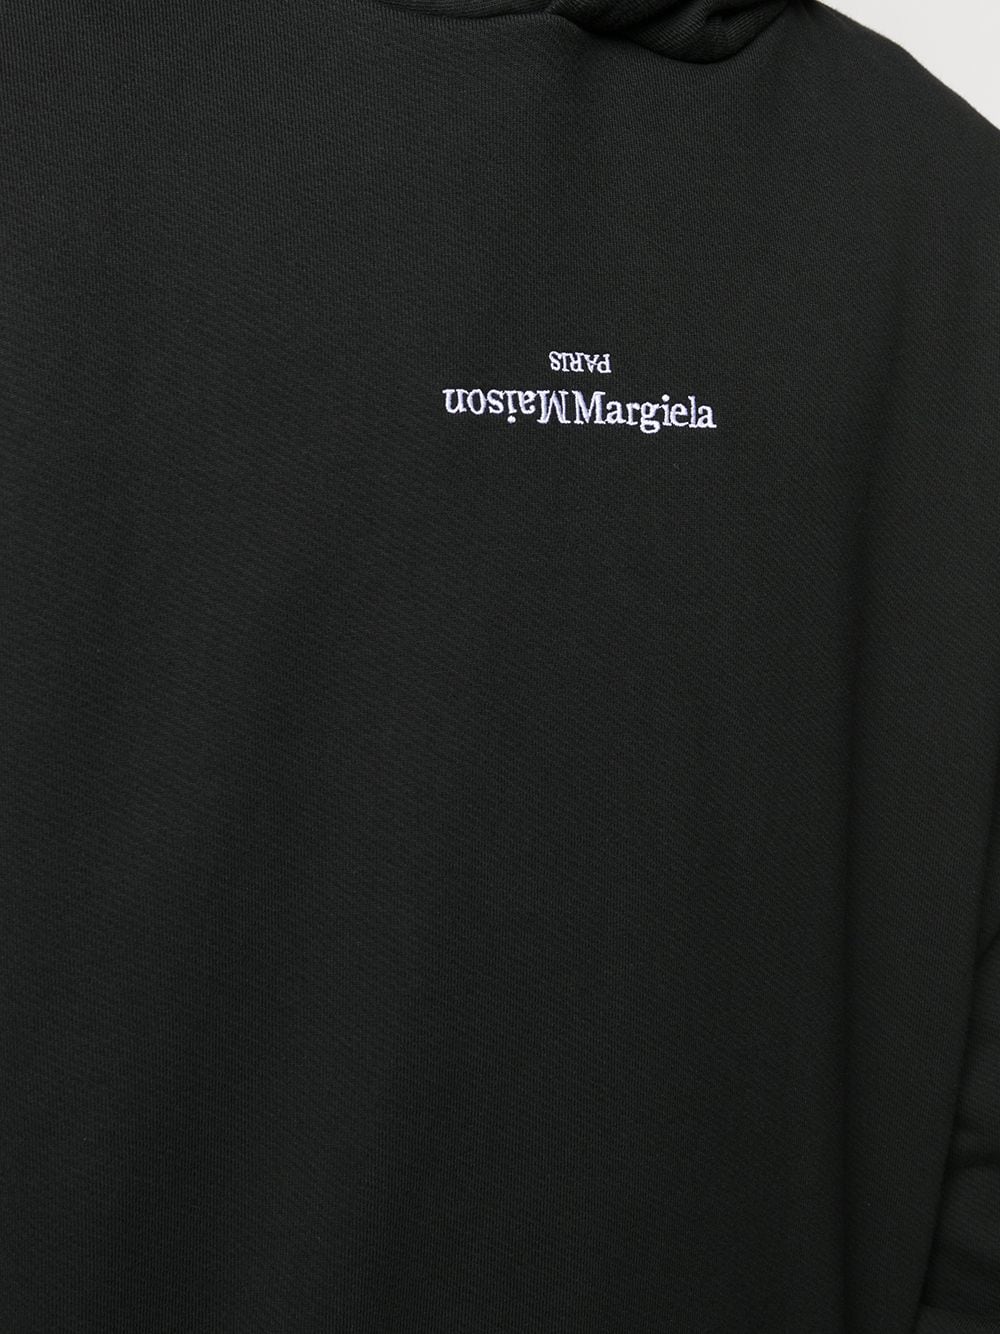 Black upsidedown logo sweatshirt